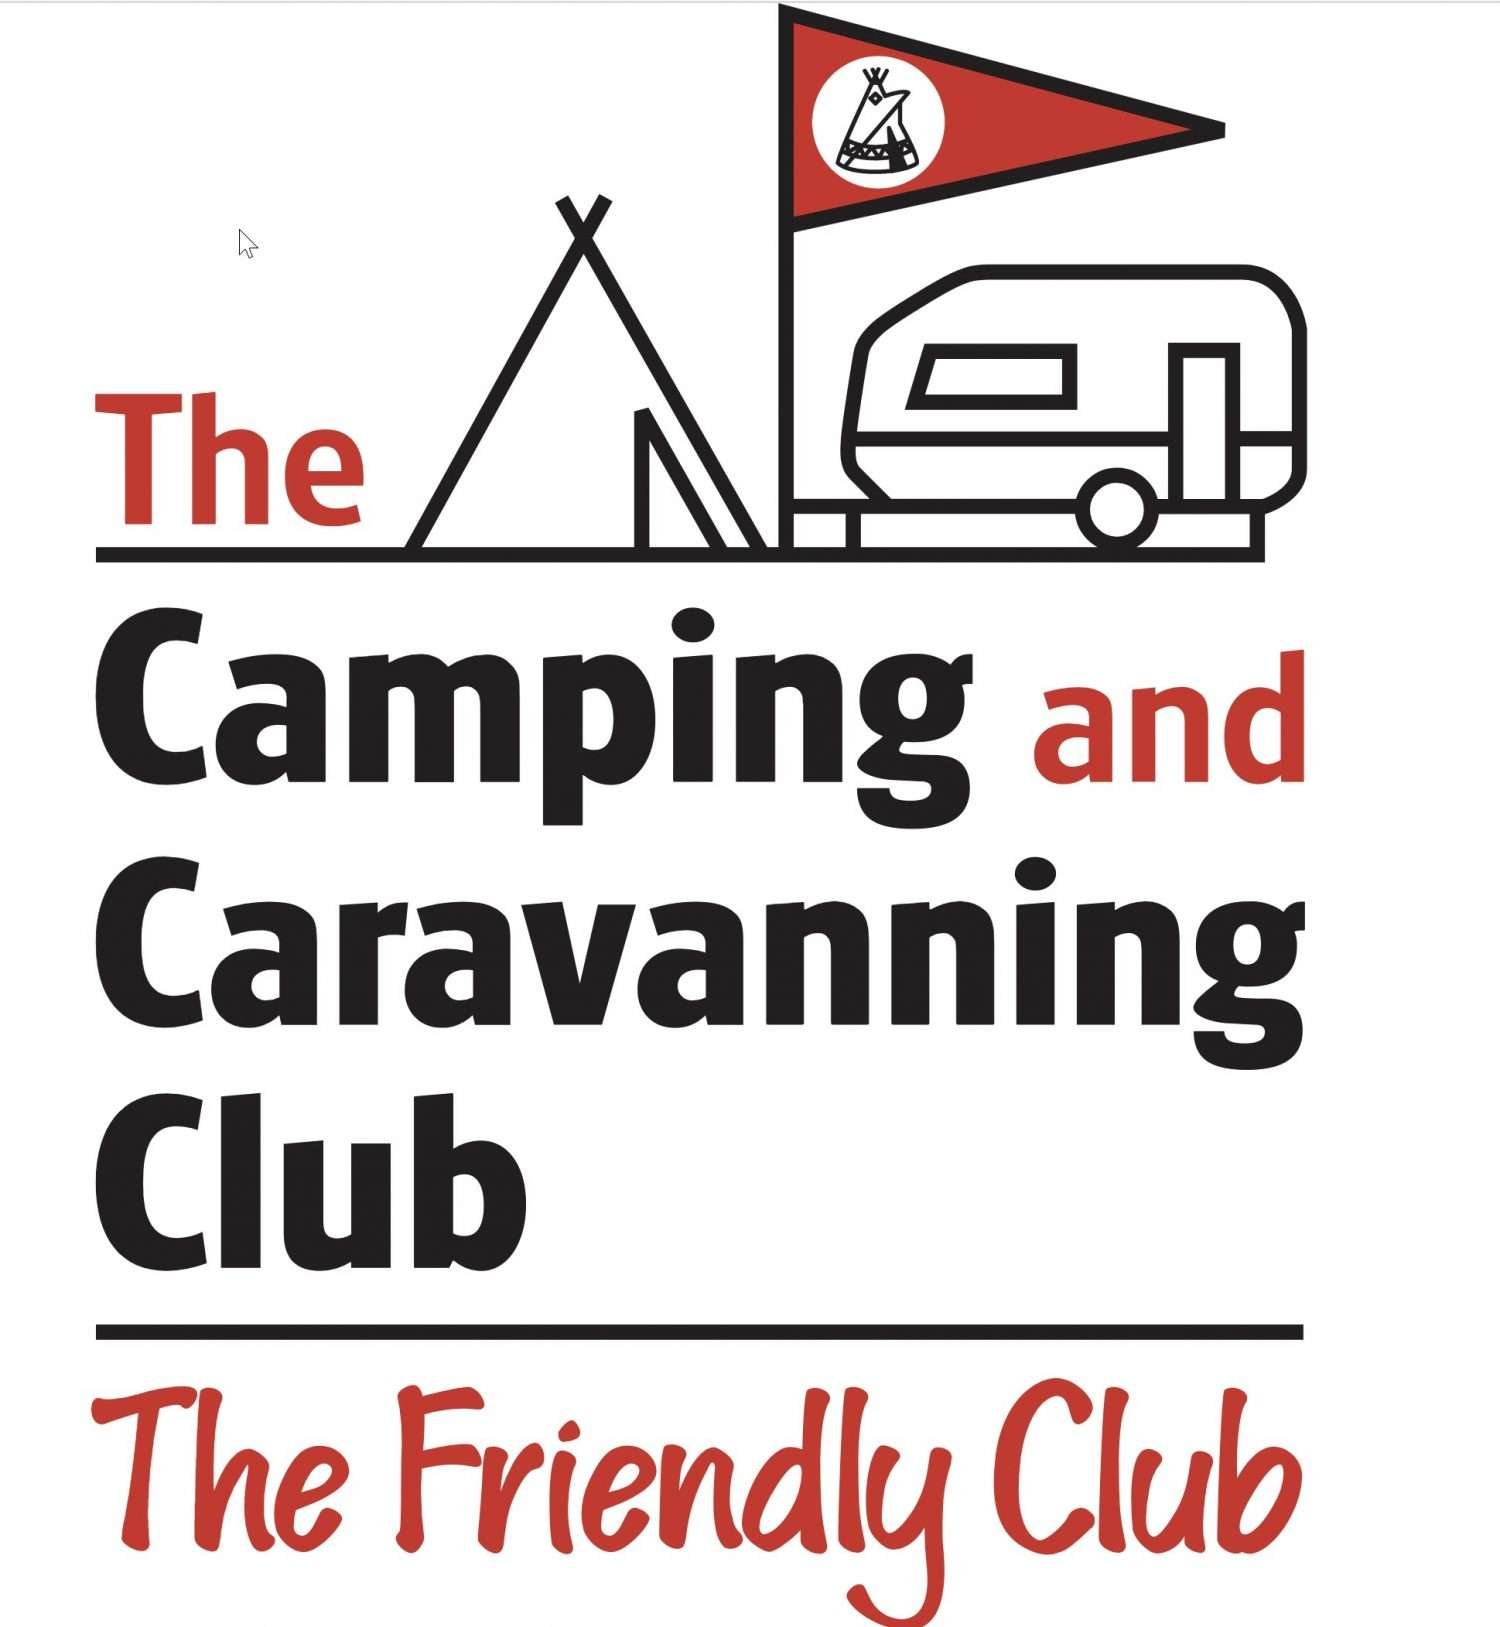 Camping and Caravanning Club logo